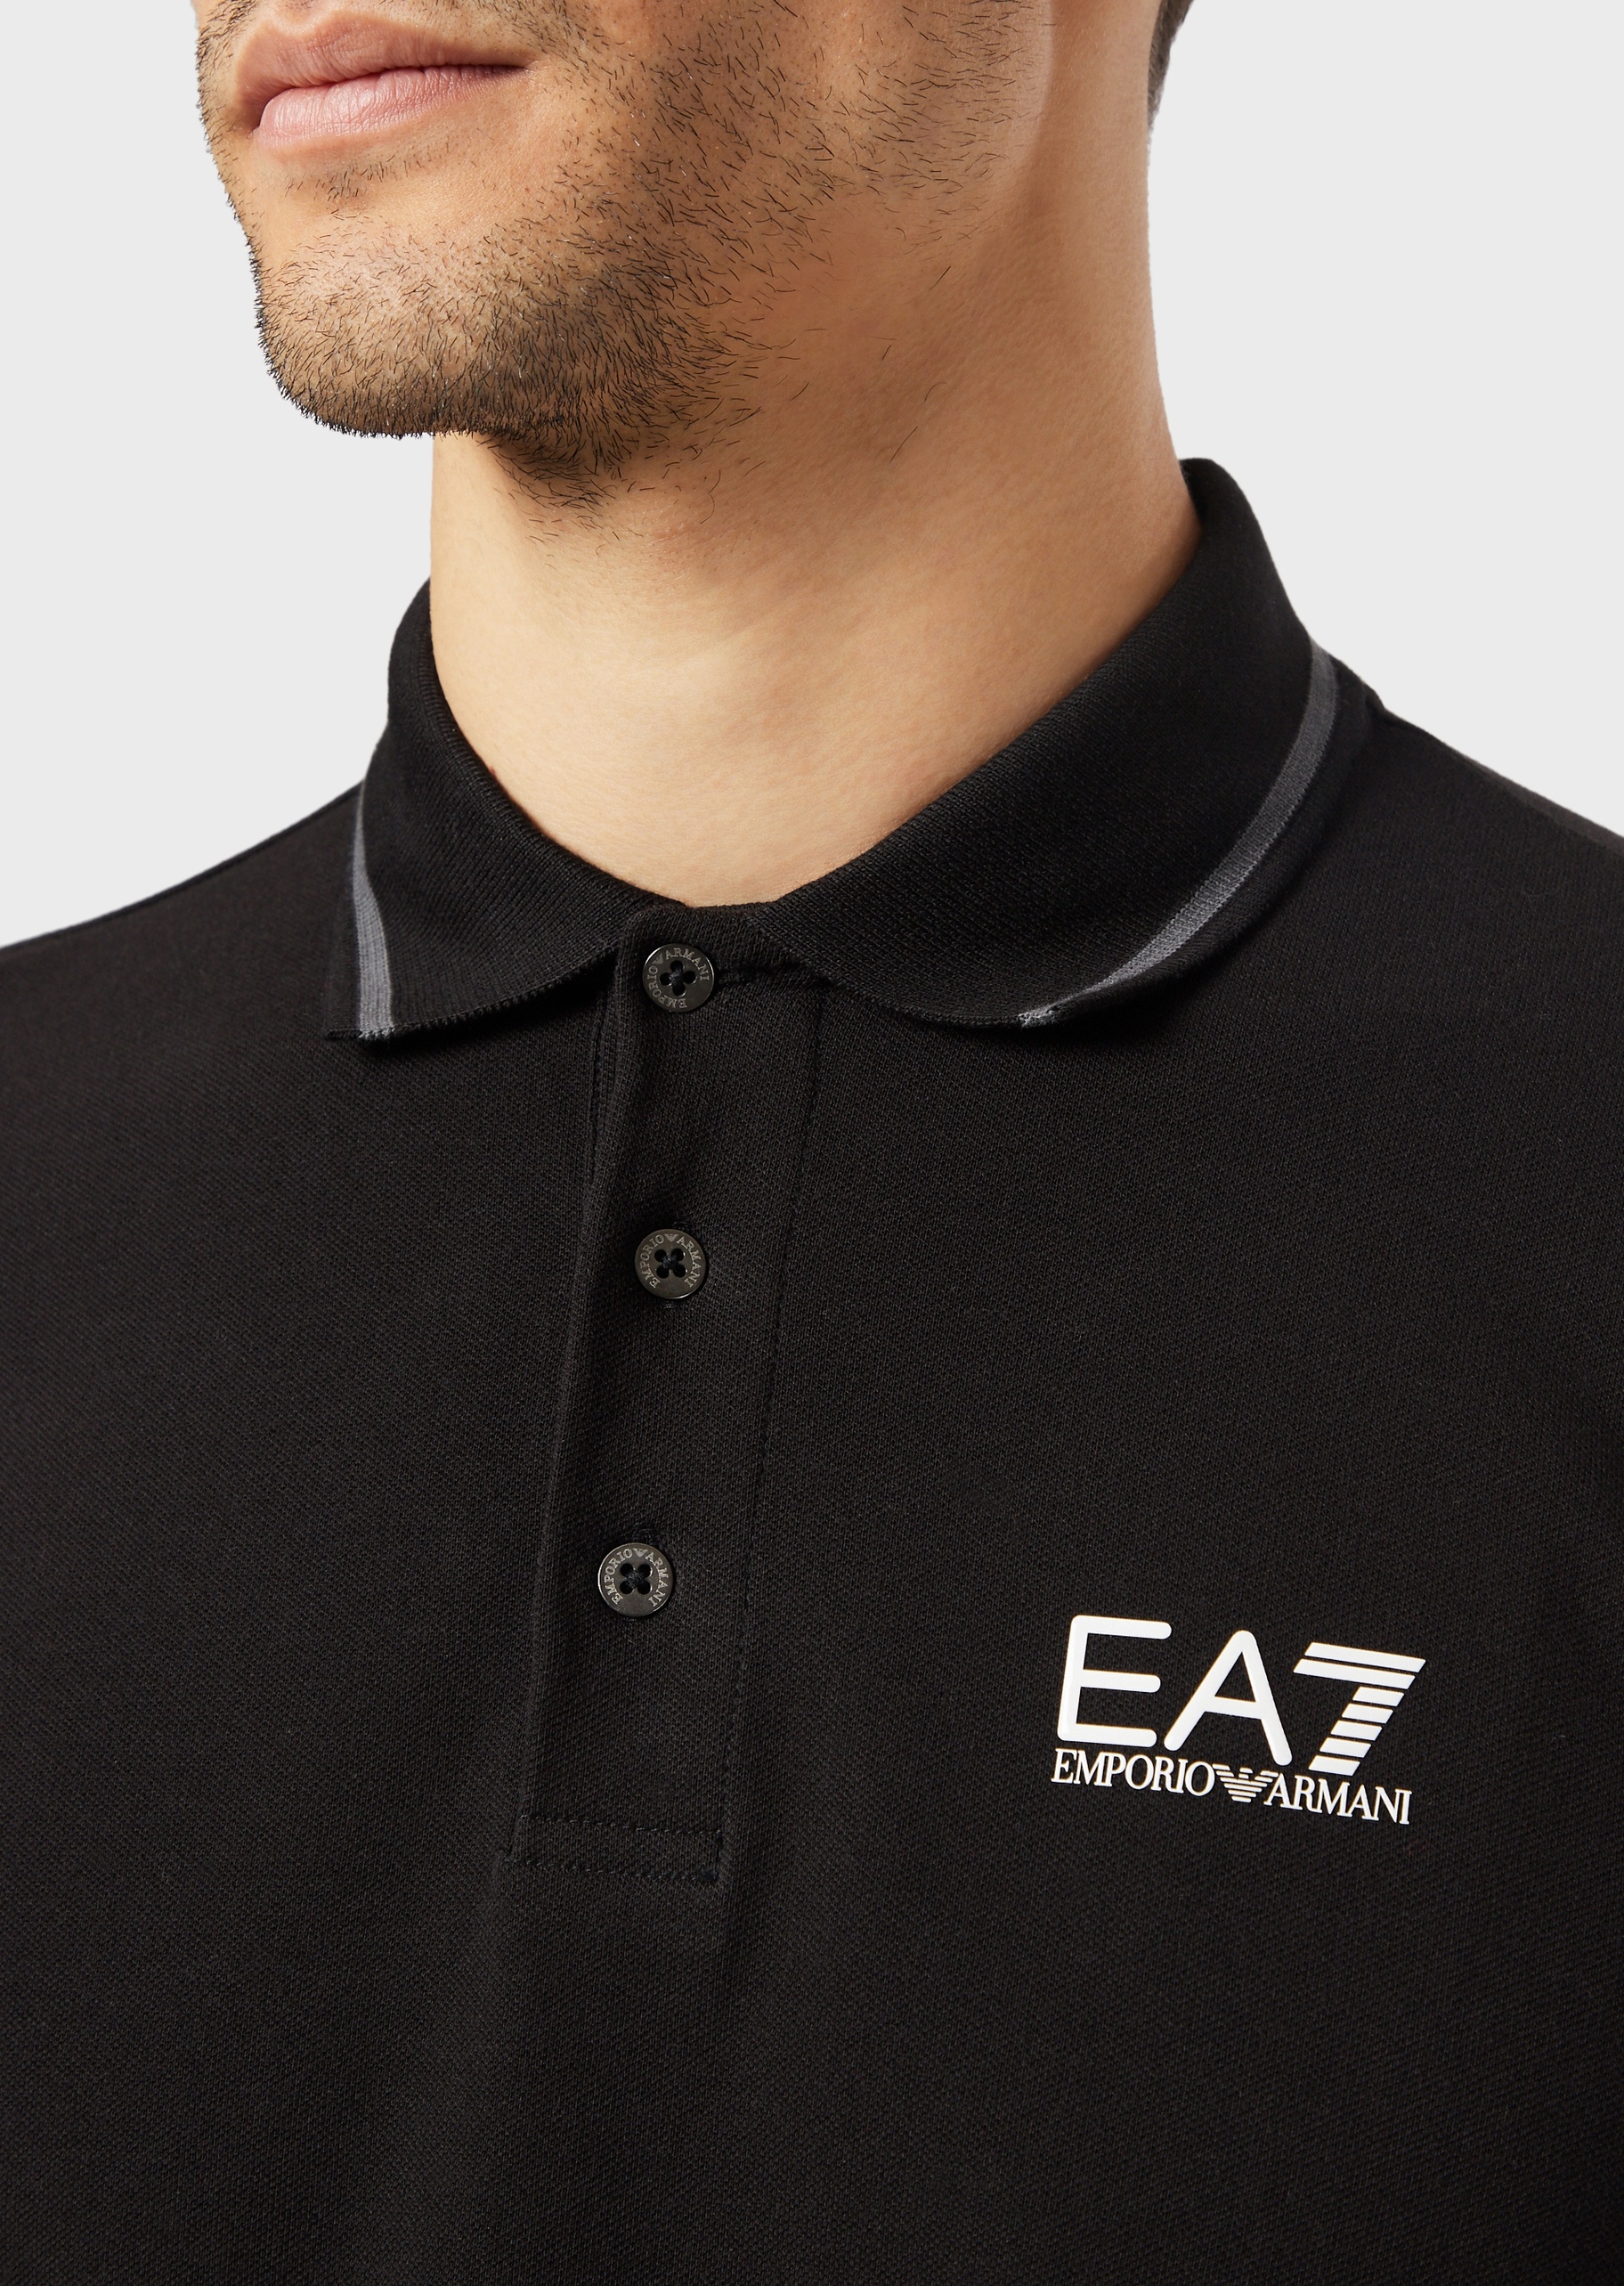 EA7 男士纯棉微弹修身短袖翻领健身Polo衫